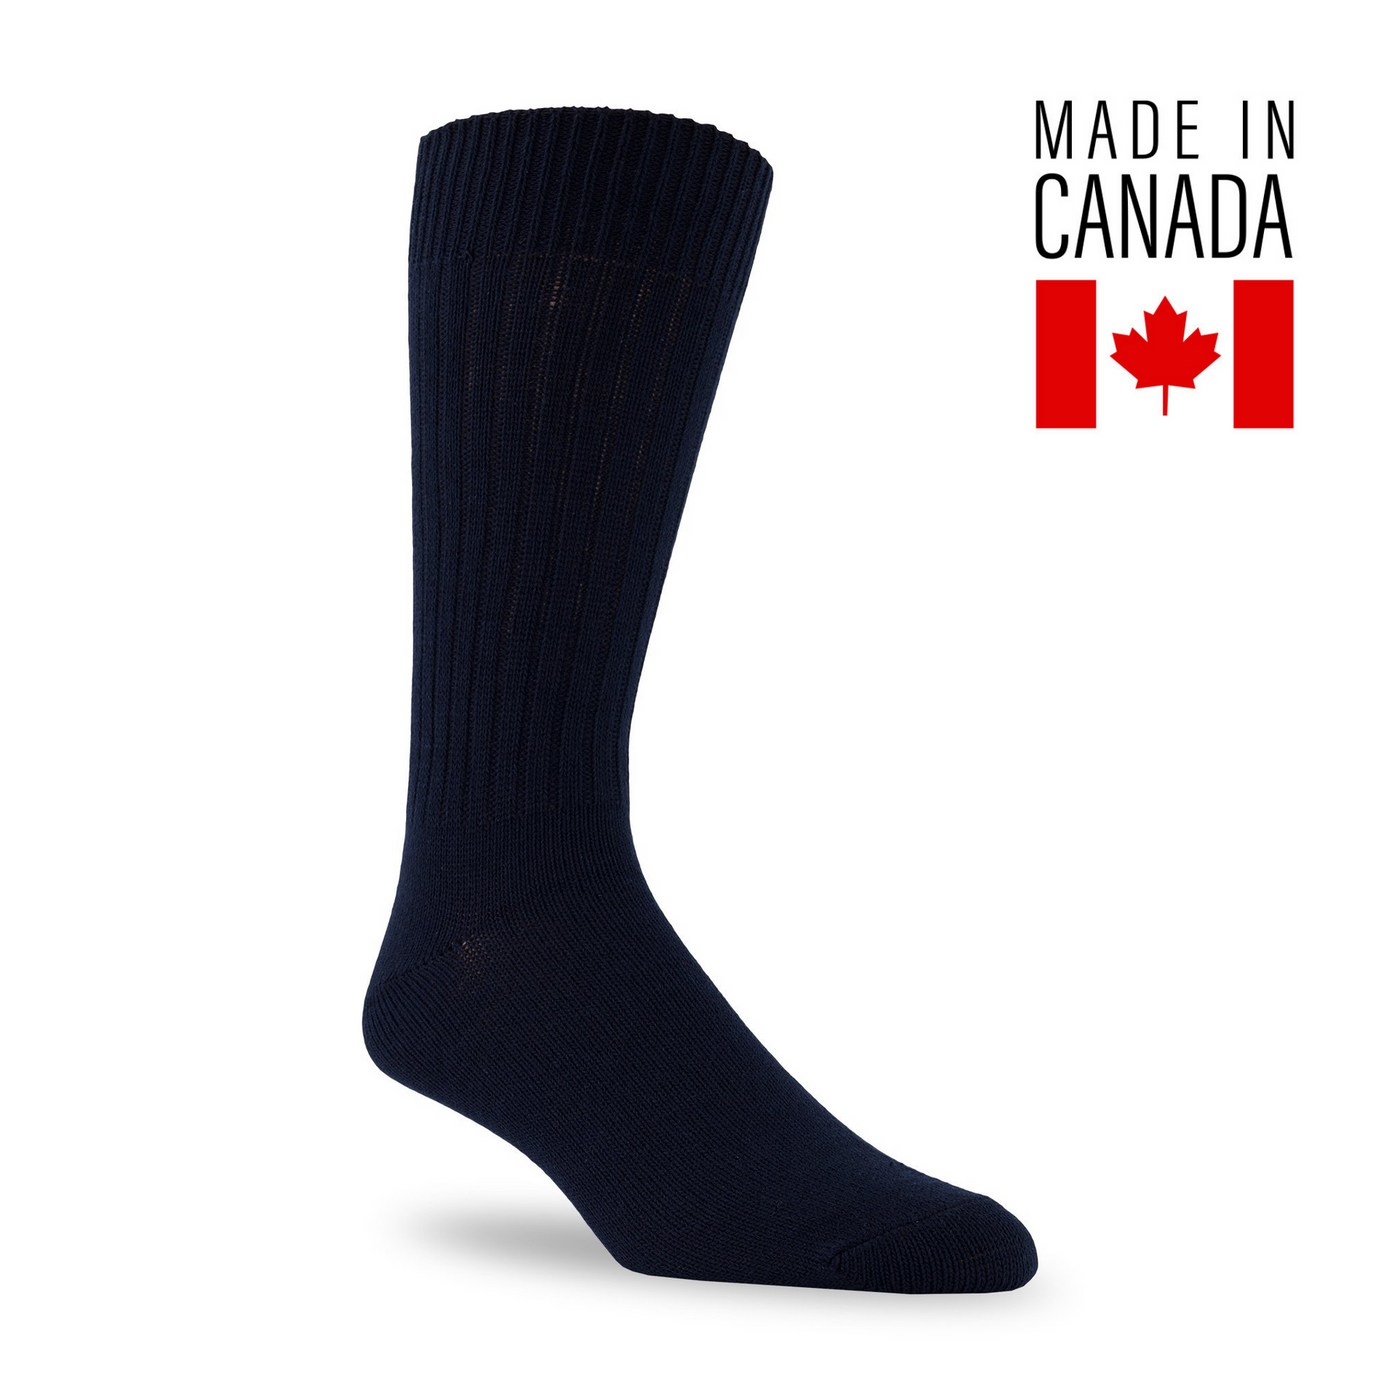 Organic Cotton Socks made in Canada 